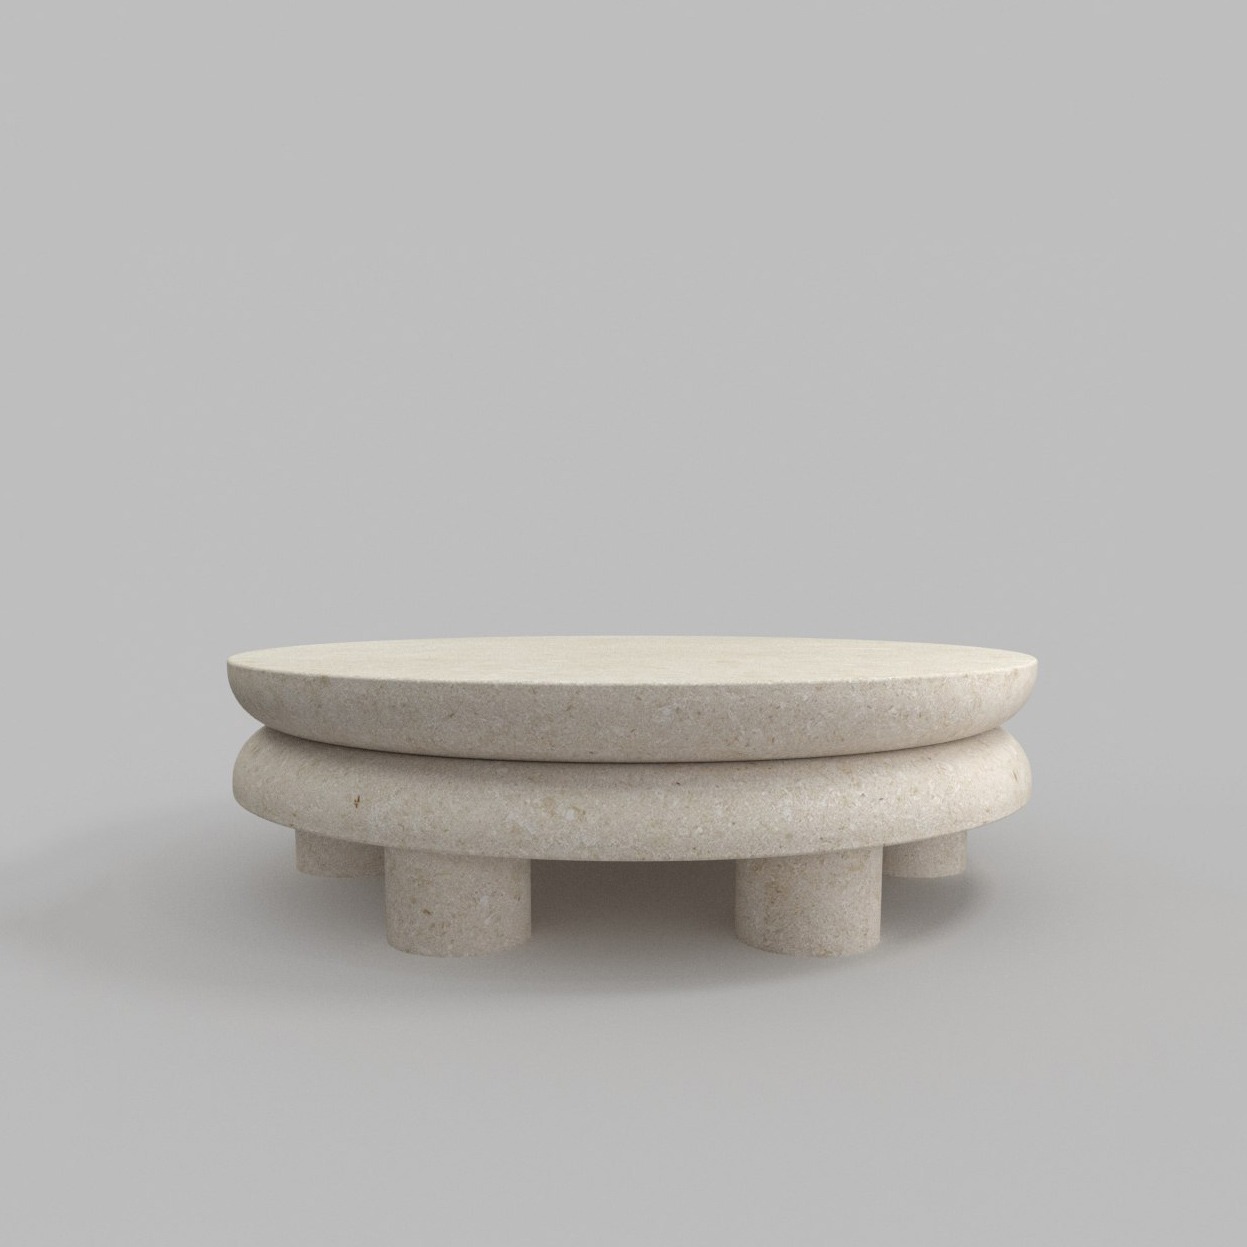 Brut Sculptural Low Coffee Table by Jiri Krejcirik From Concrete Detailed View